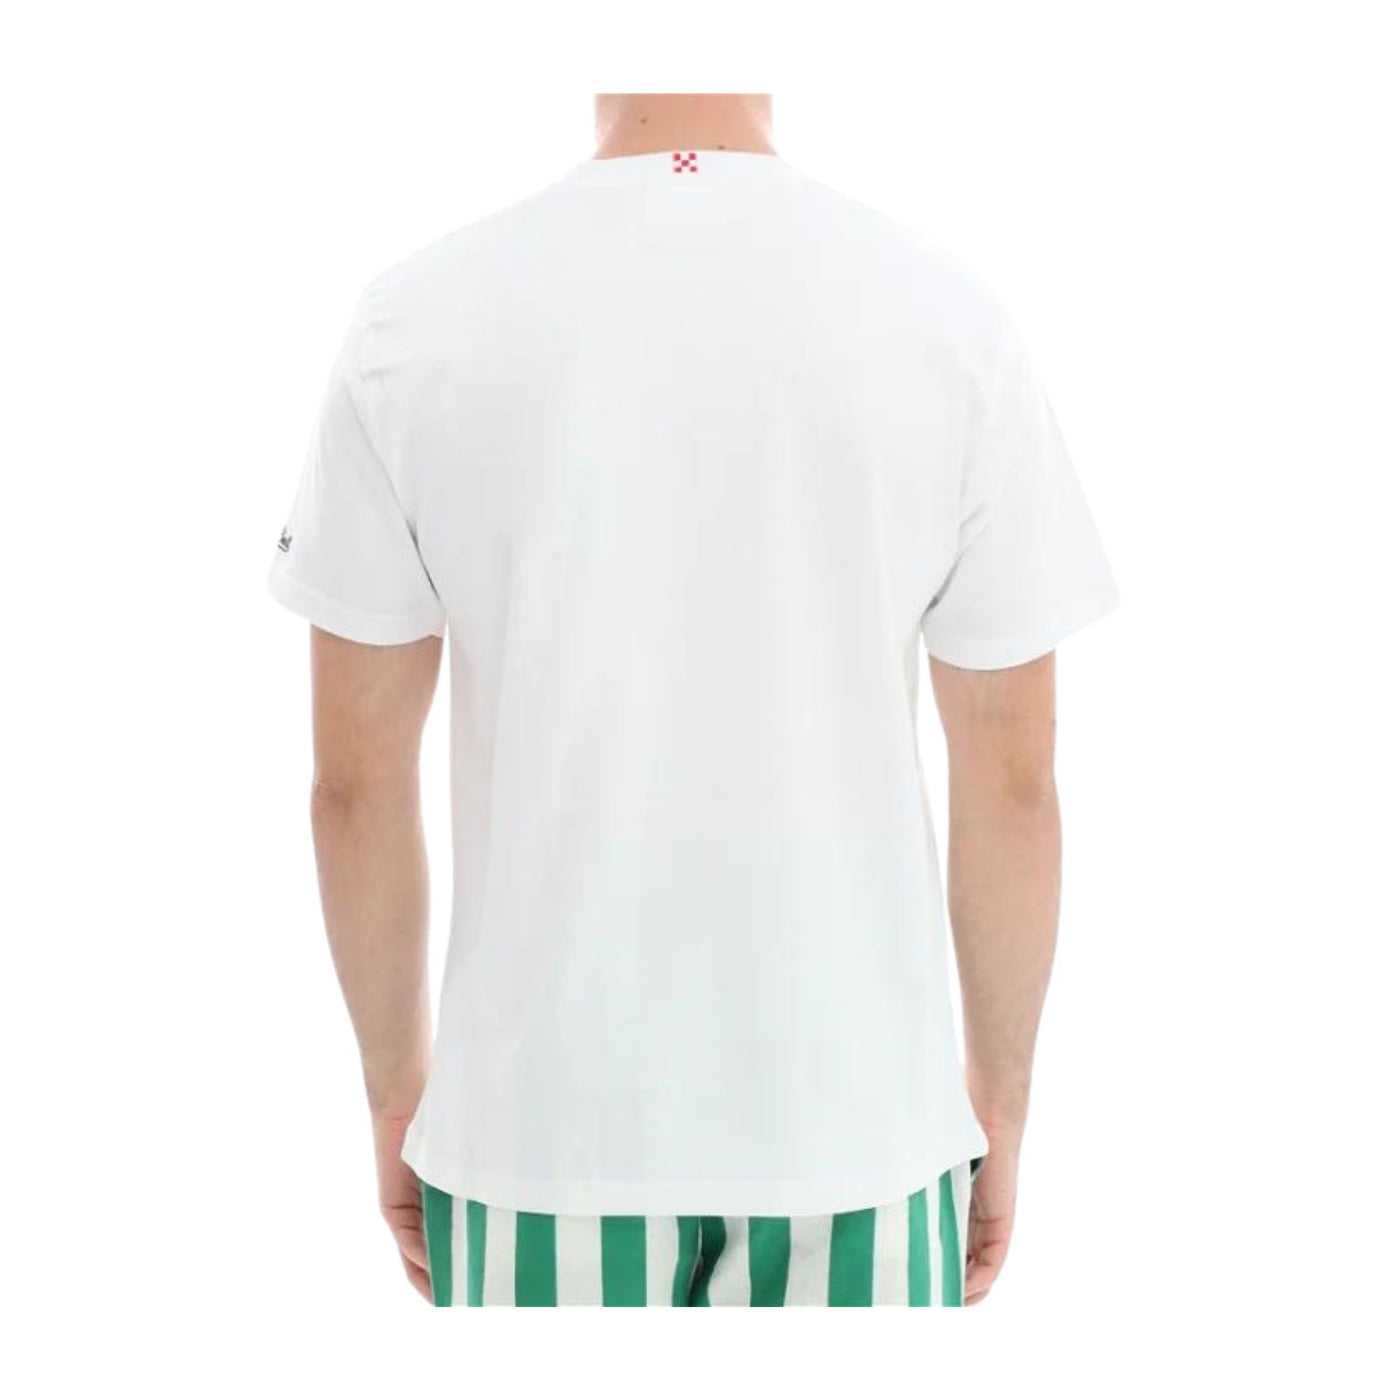 T-shirt Uomo Bianca con maxi stampa frontale e logo ricamato a contrasto sulla manica